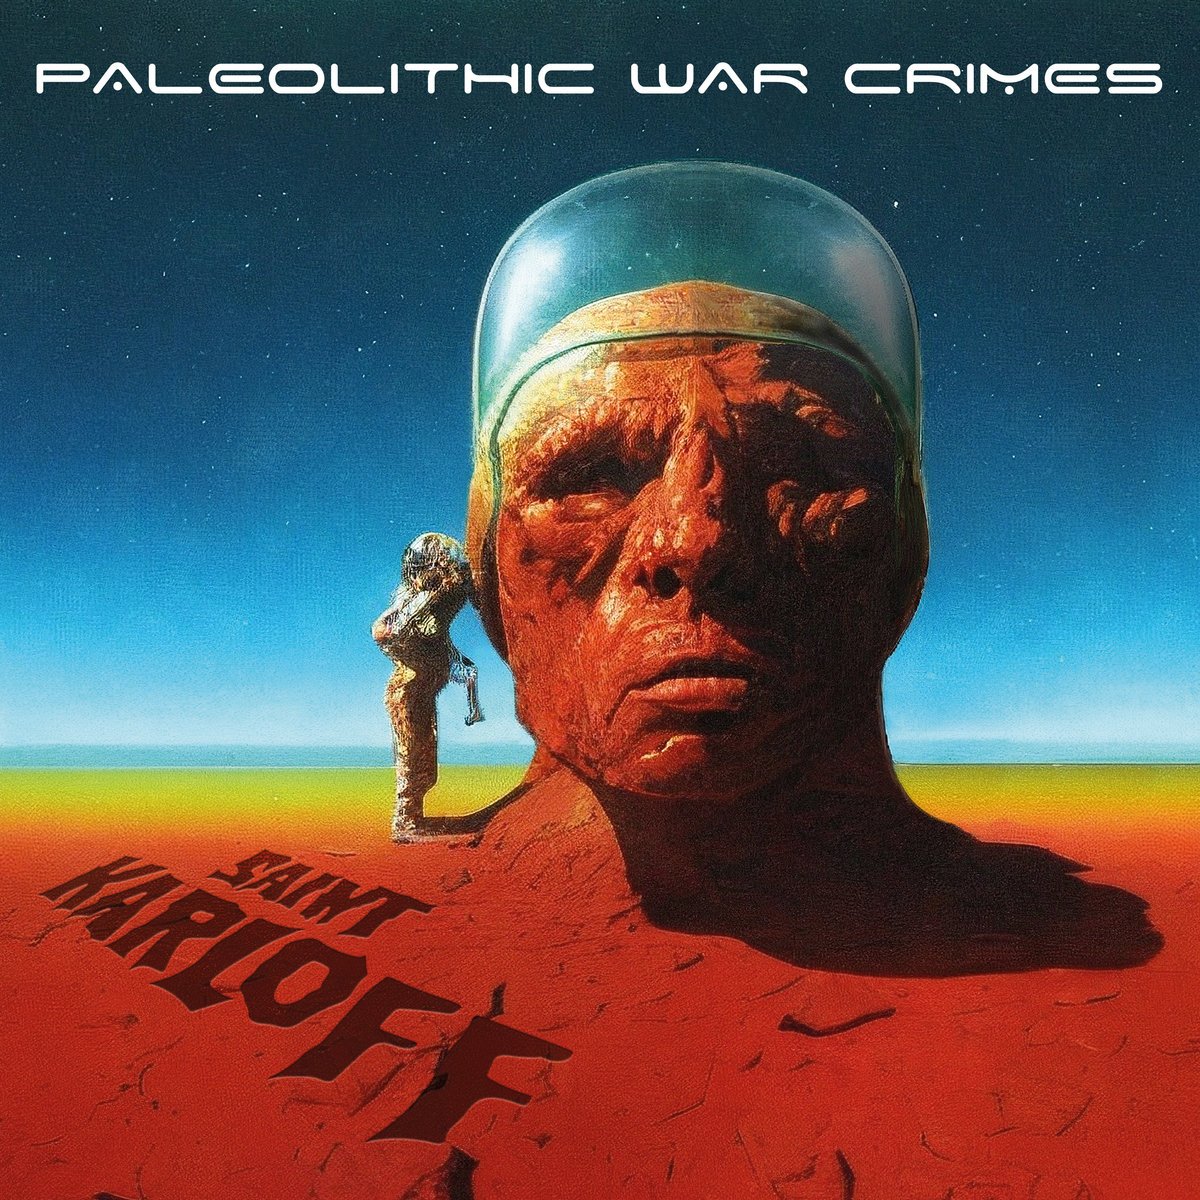 Bring on the riffs!

Saint Karloff - Palaeolithic War Crime